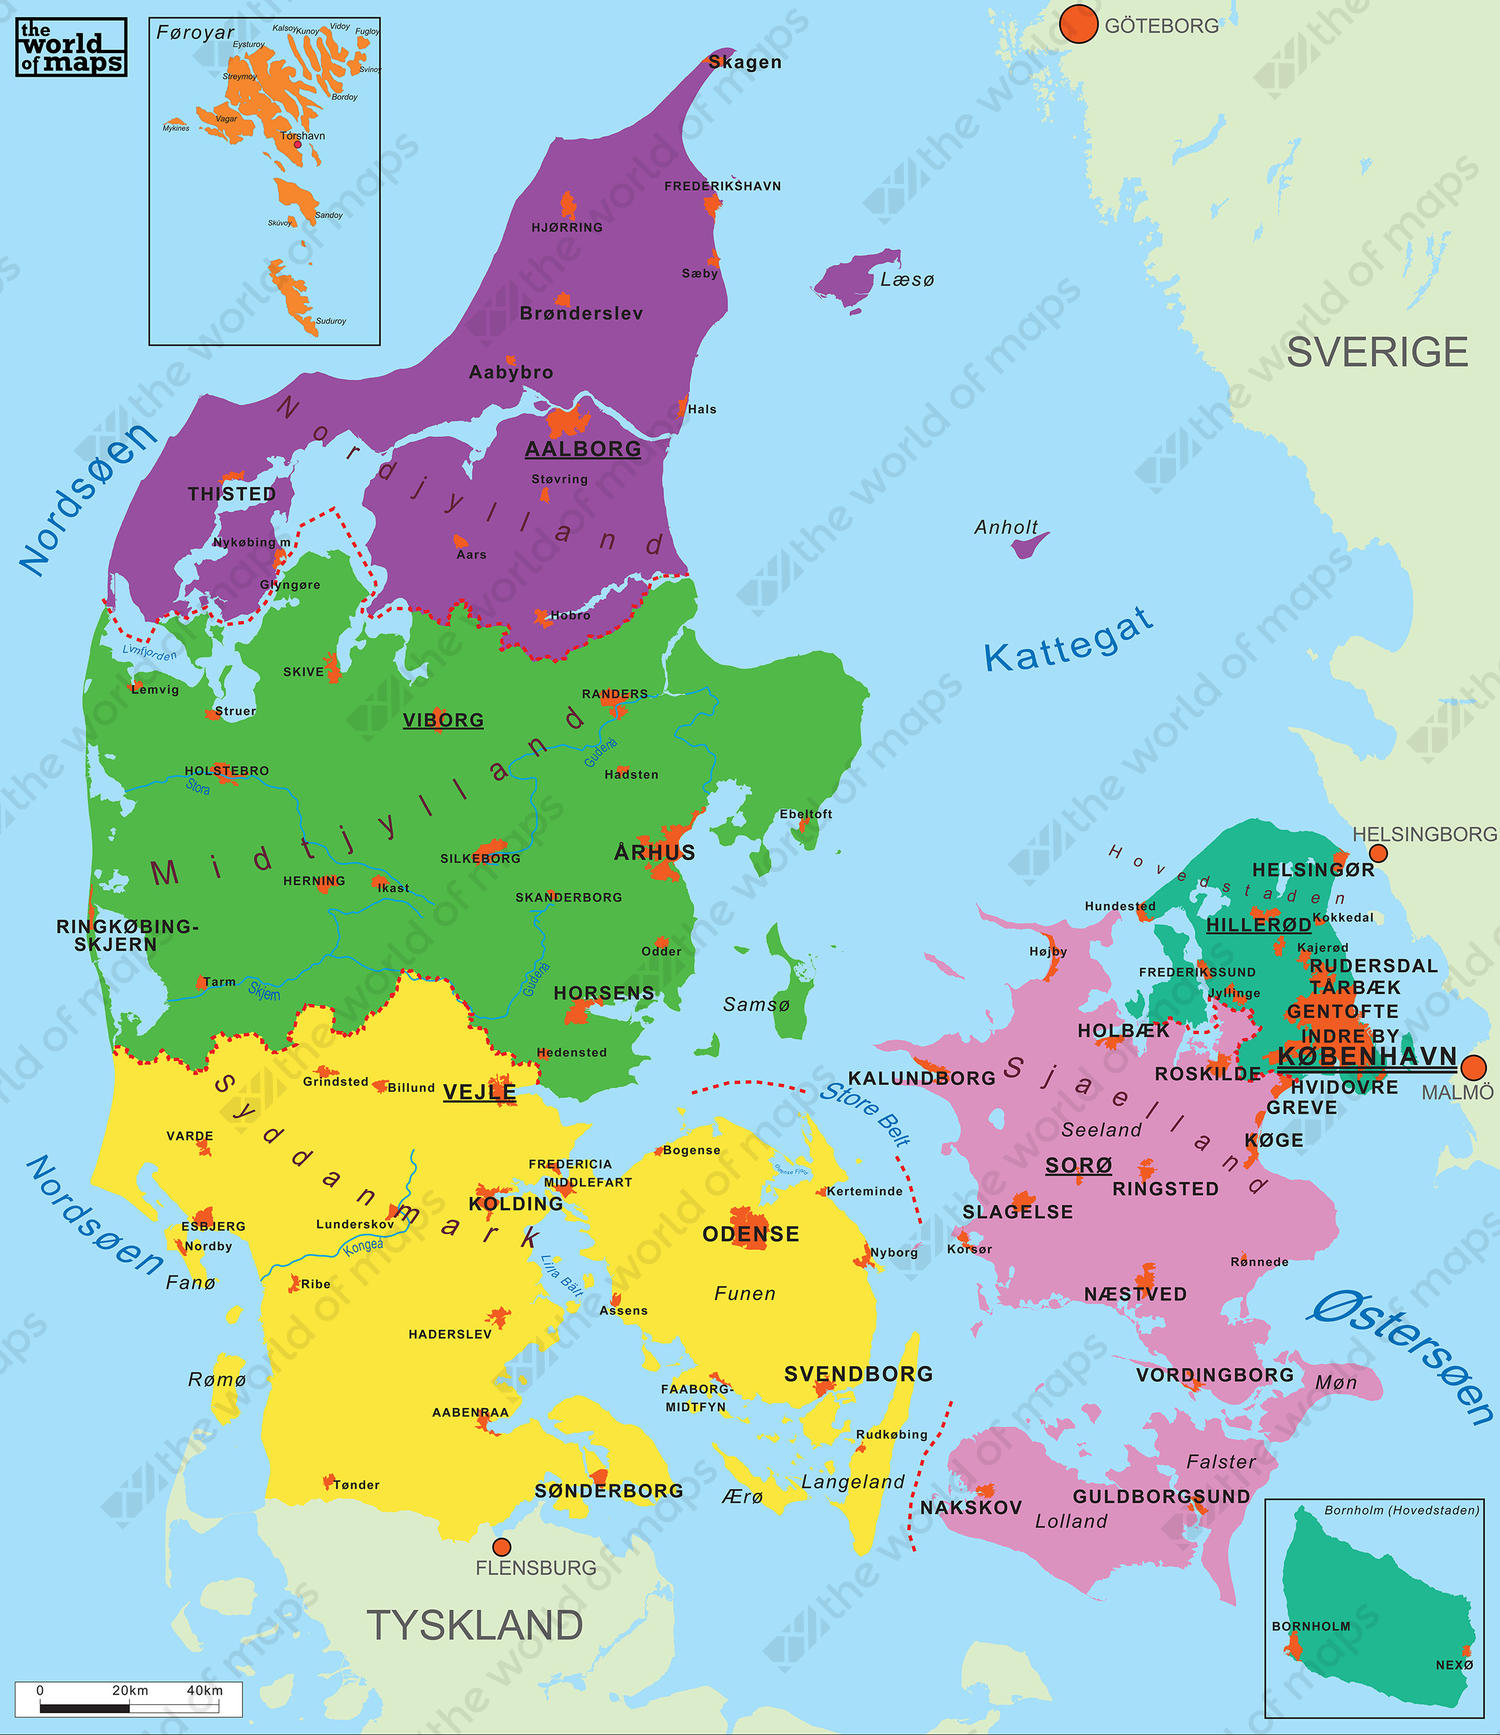 Simple Digital Denmark Map 68 | The World of Maps.com